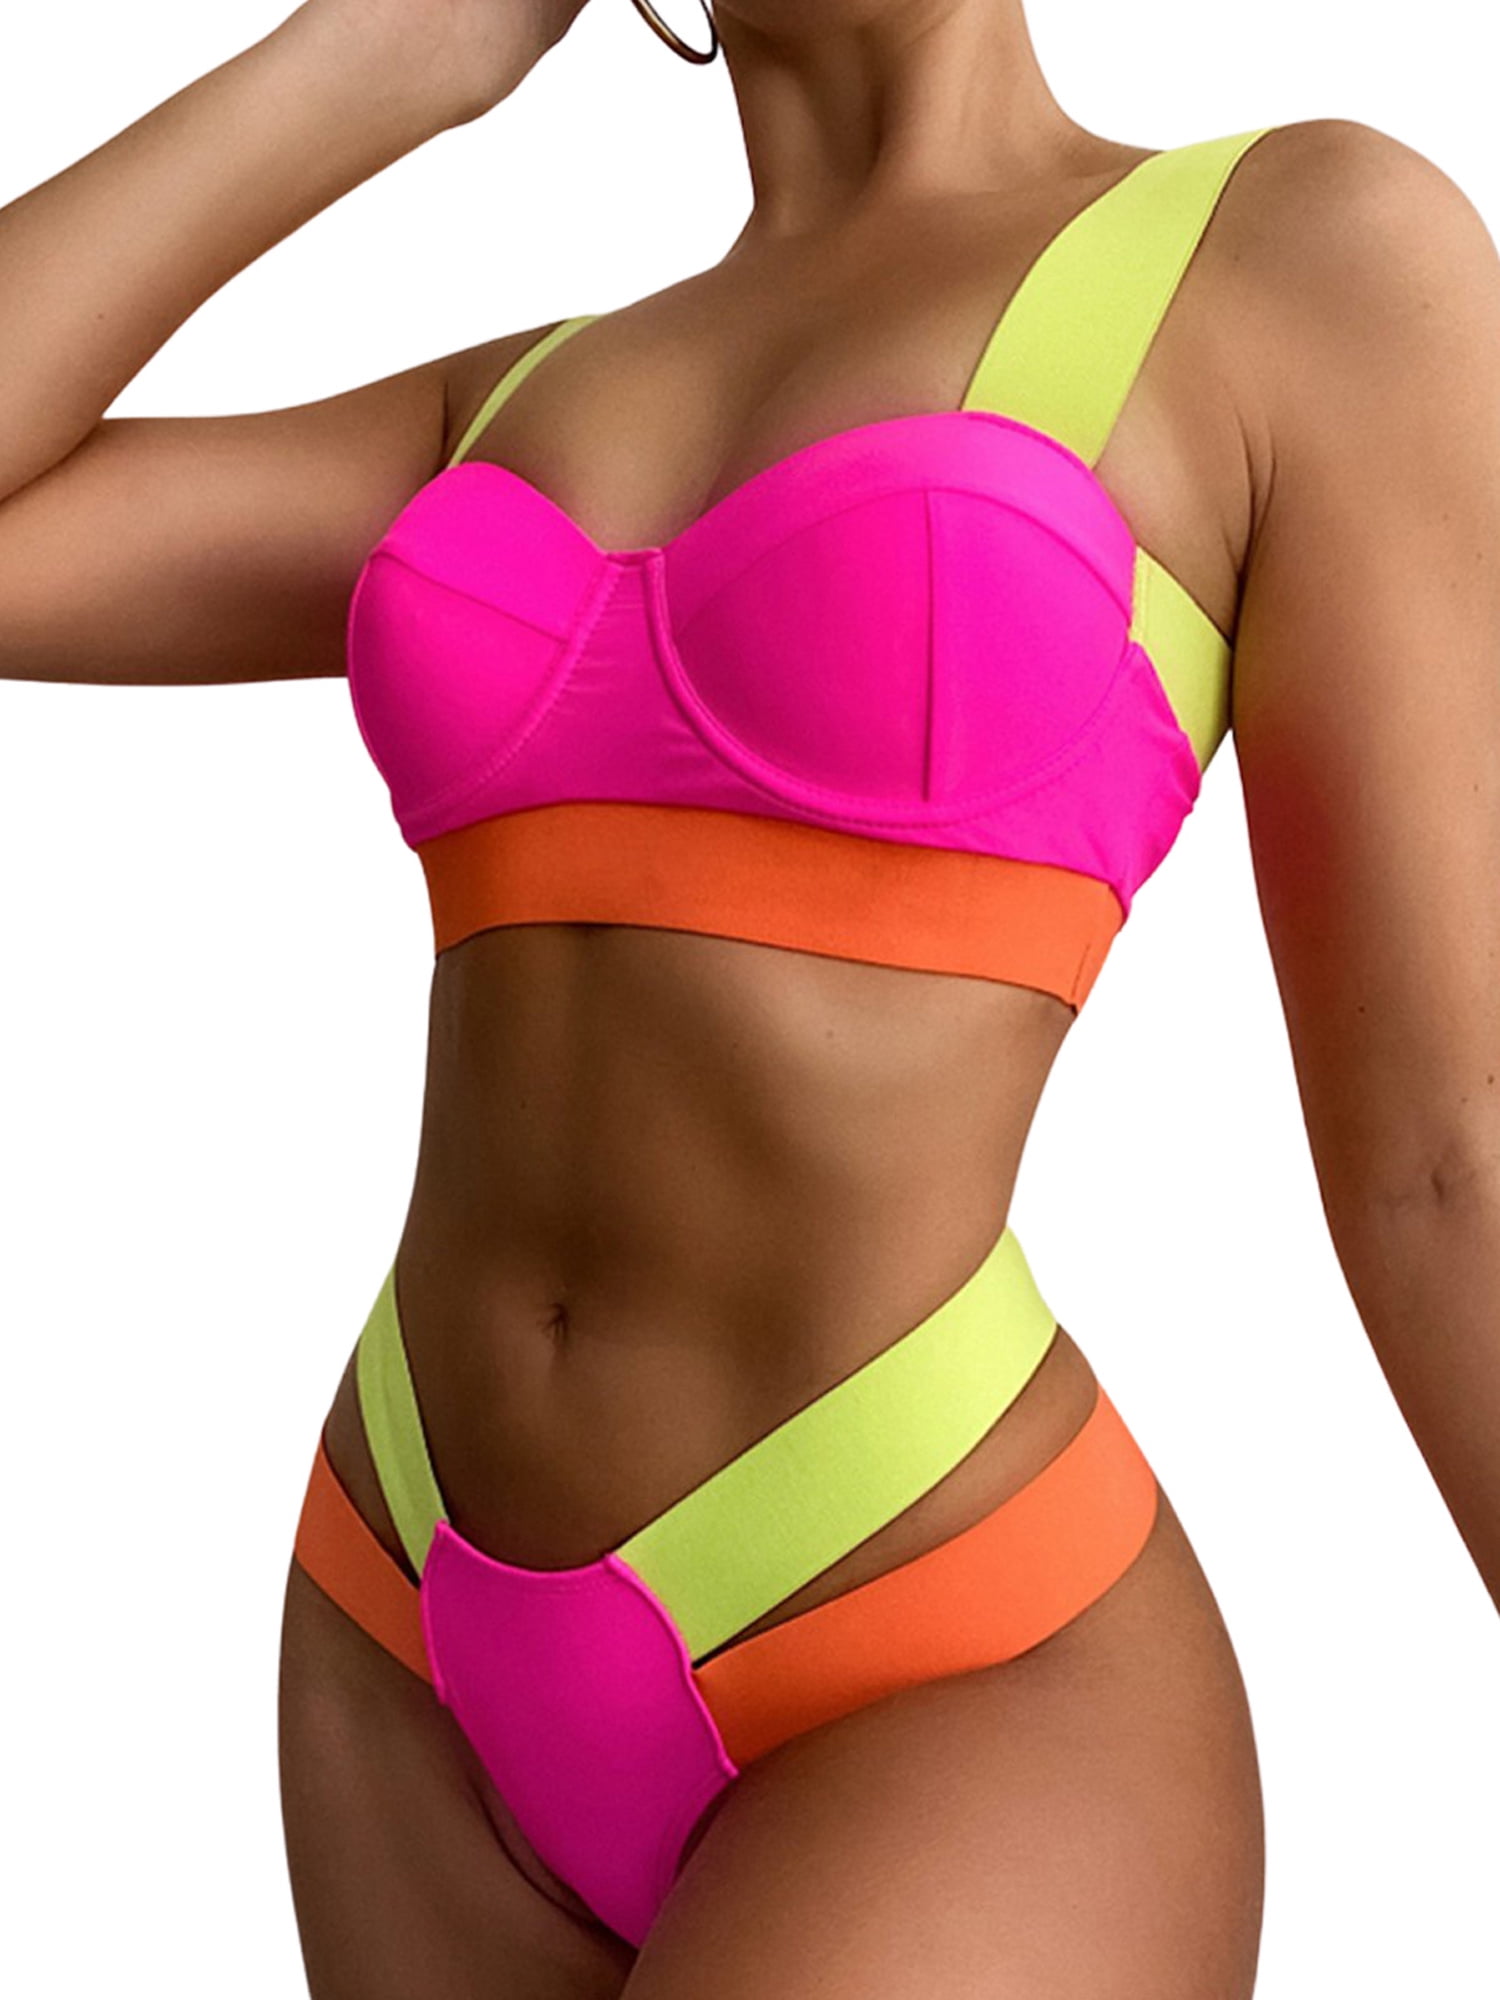 Details about   Ladies Push-Up Strappy Bra Bikini Set Swimsuit High Waist Colorblock Swimwear 